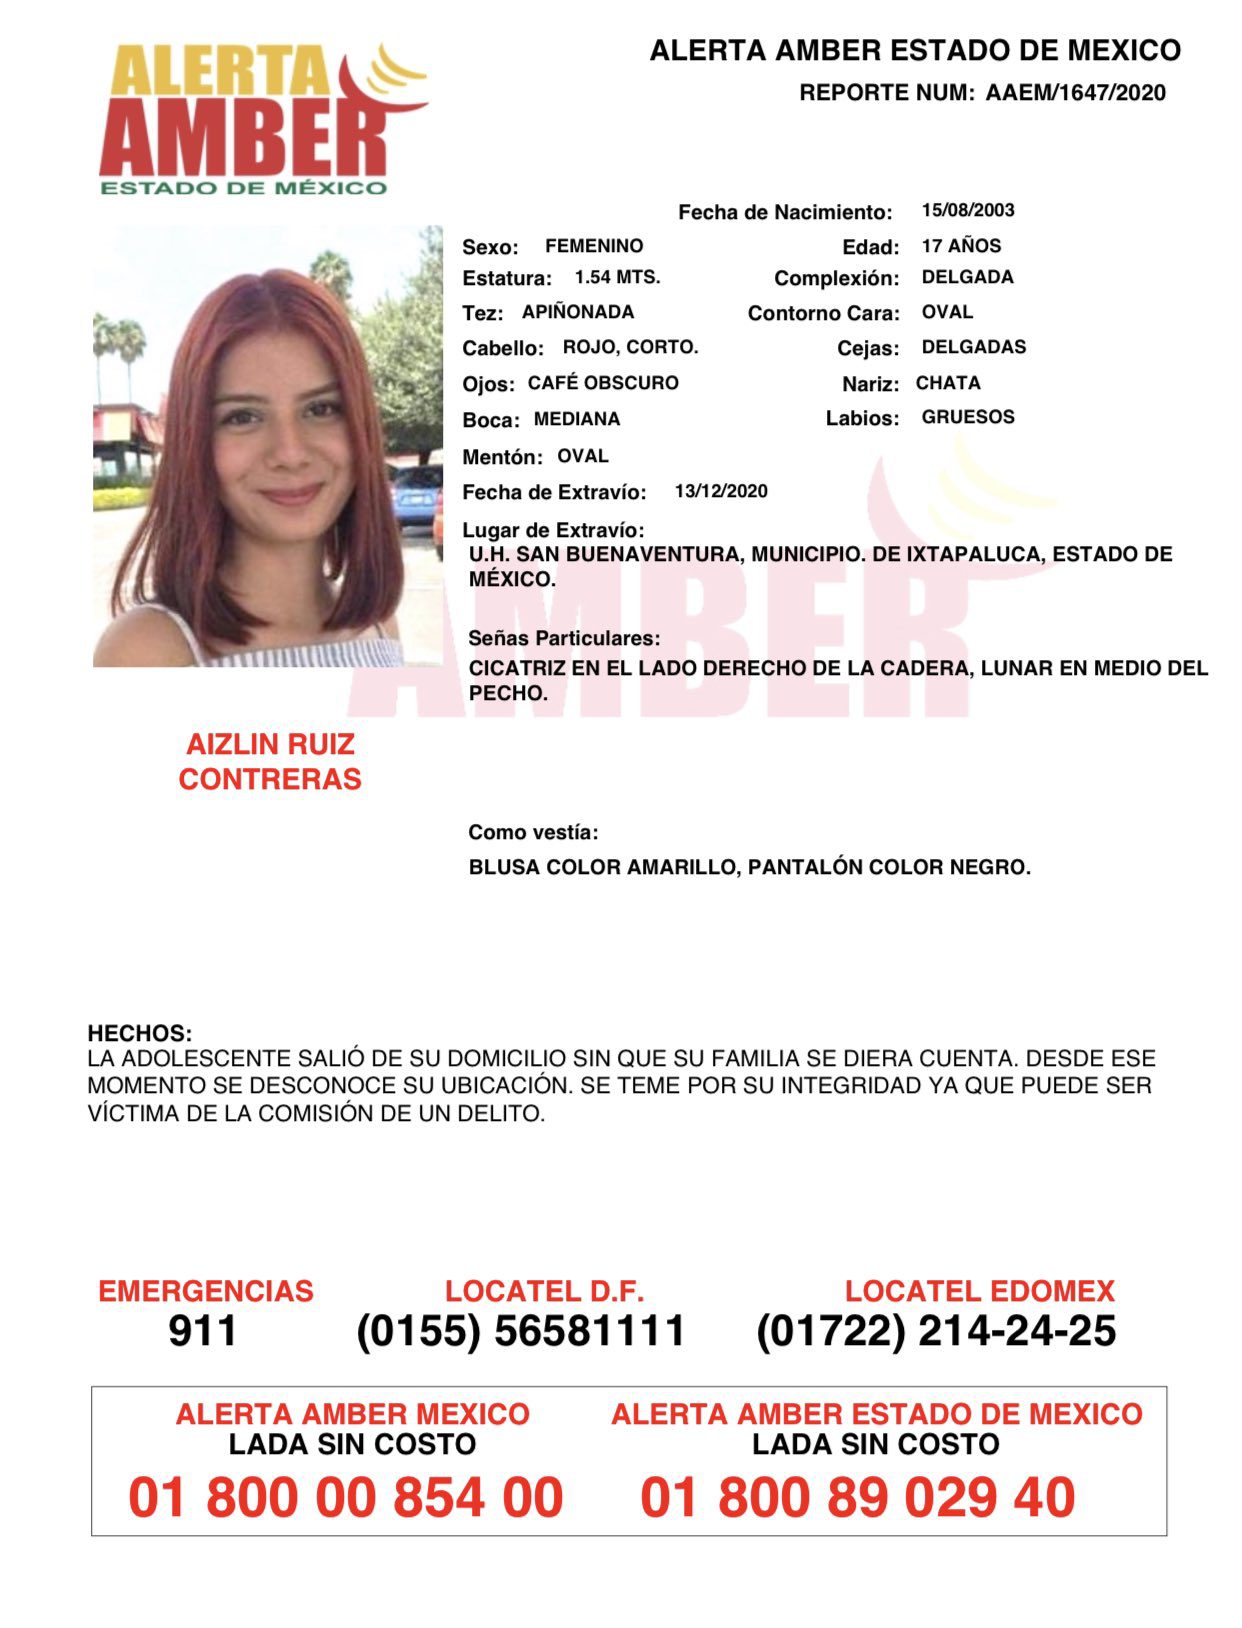 Buscan a Aizlin Ruiz, adolescente que desapareció en Ixtapaluca